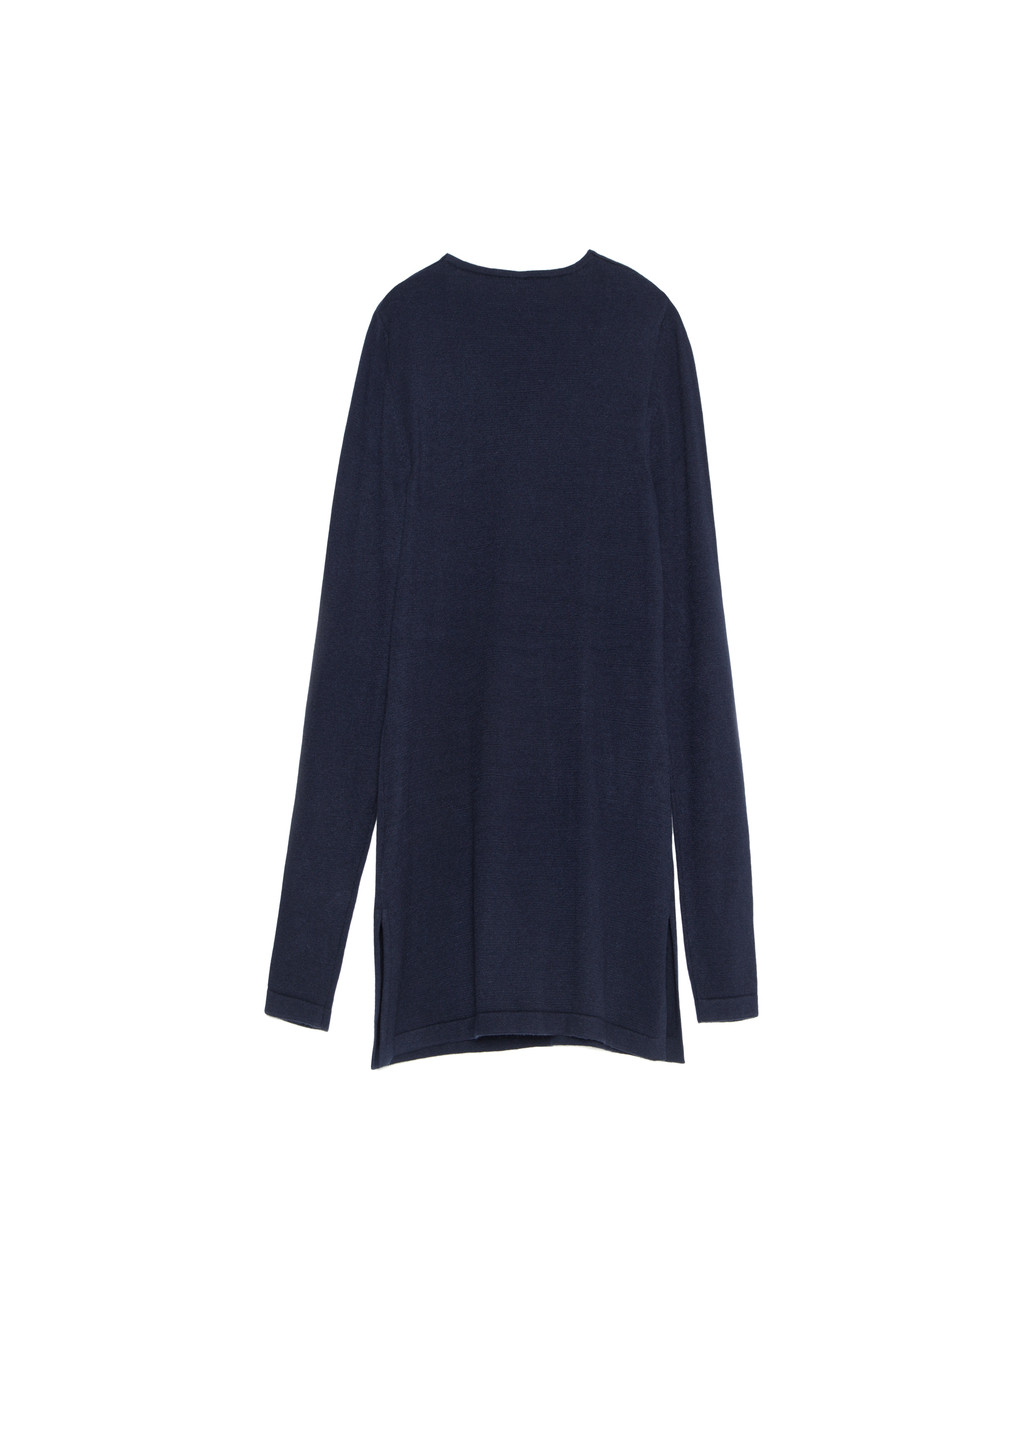 Темно-синий демисезонный пуловер пуловер Conte